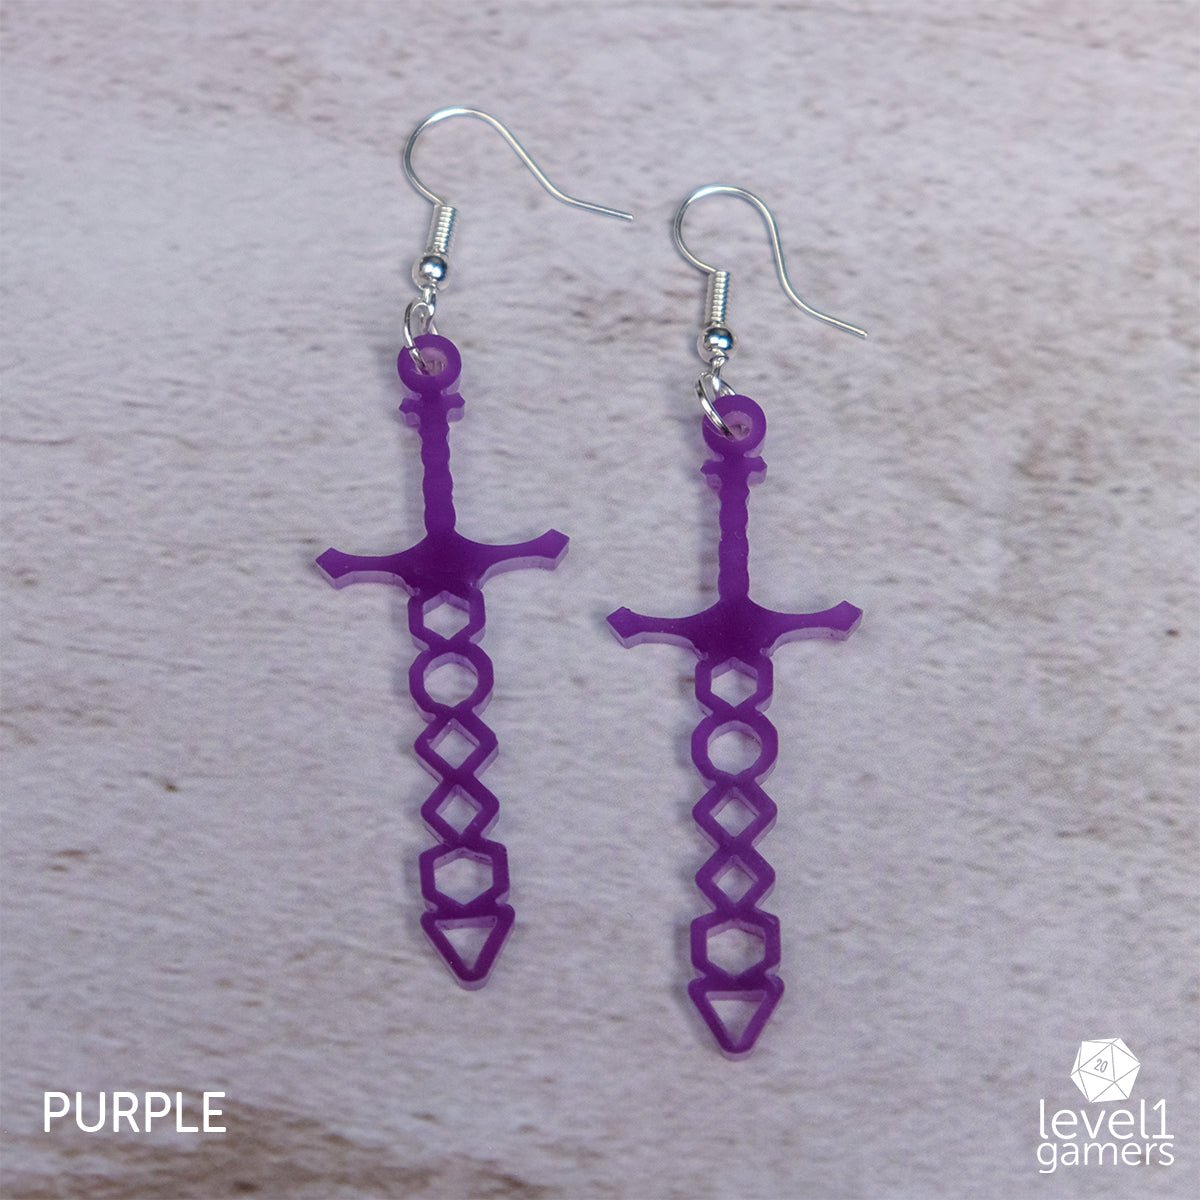 Dice Sword Acrylic Earrings  Level 1 Gamers Pendant Purple 